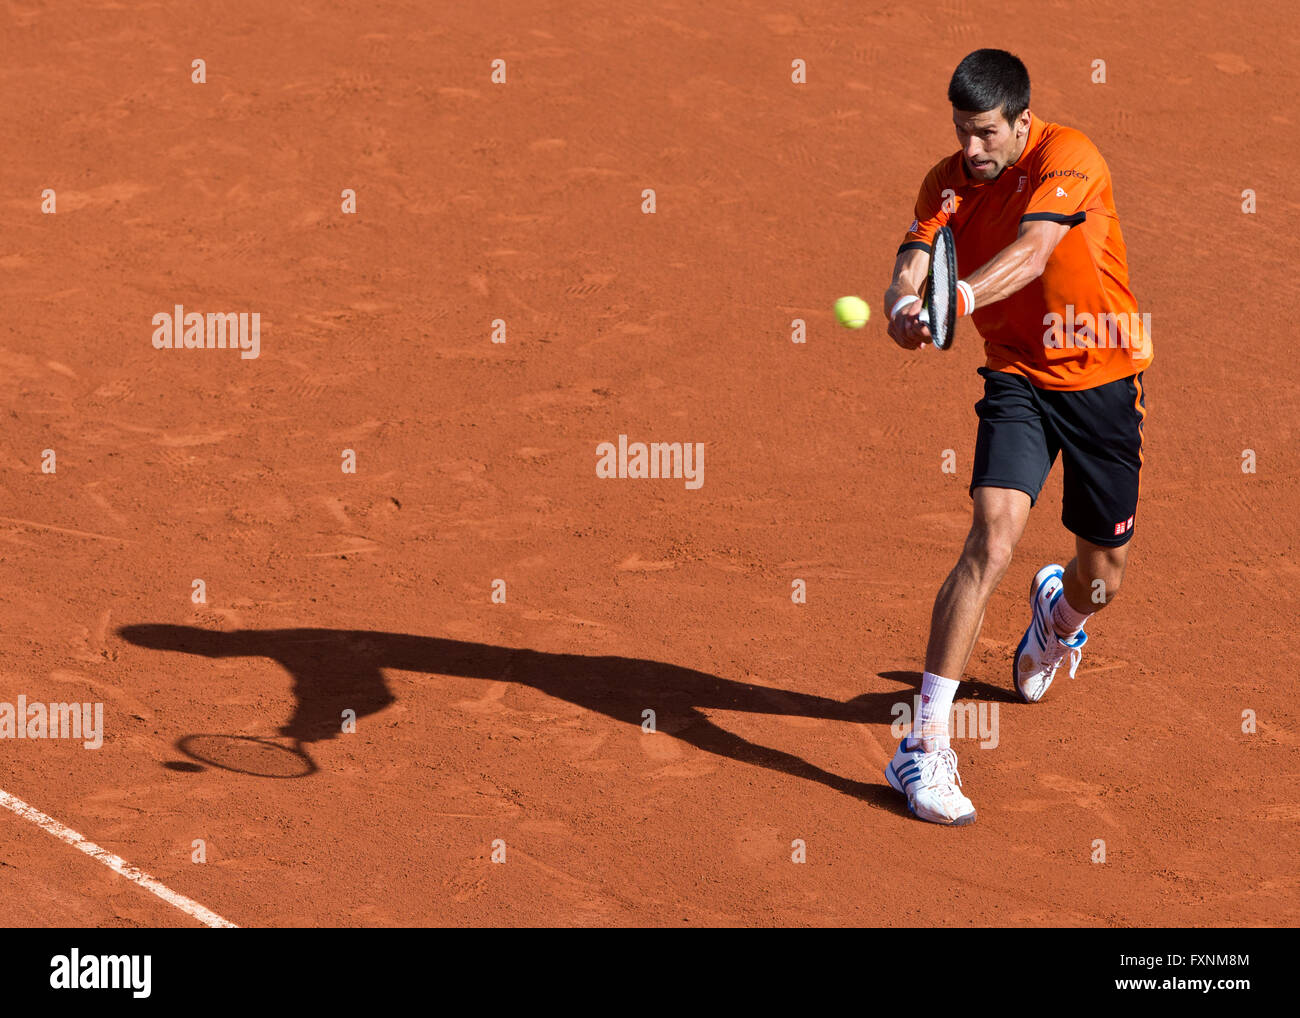 Novak Djokovic (SRB), Open de France 2015, Grand Chelem Tennis Turnier à Roland Garros, Paris, France Banque D'Images